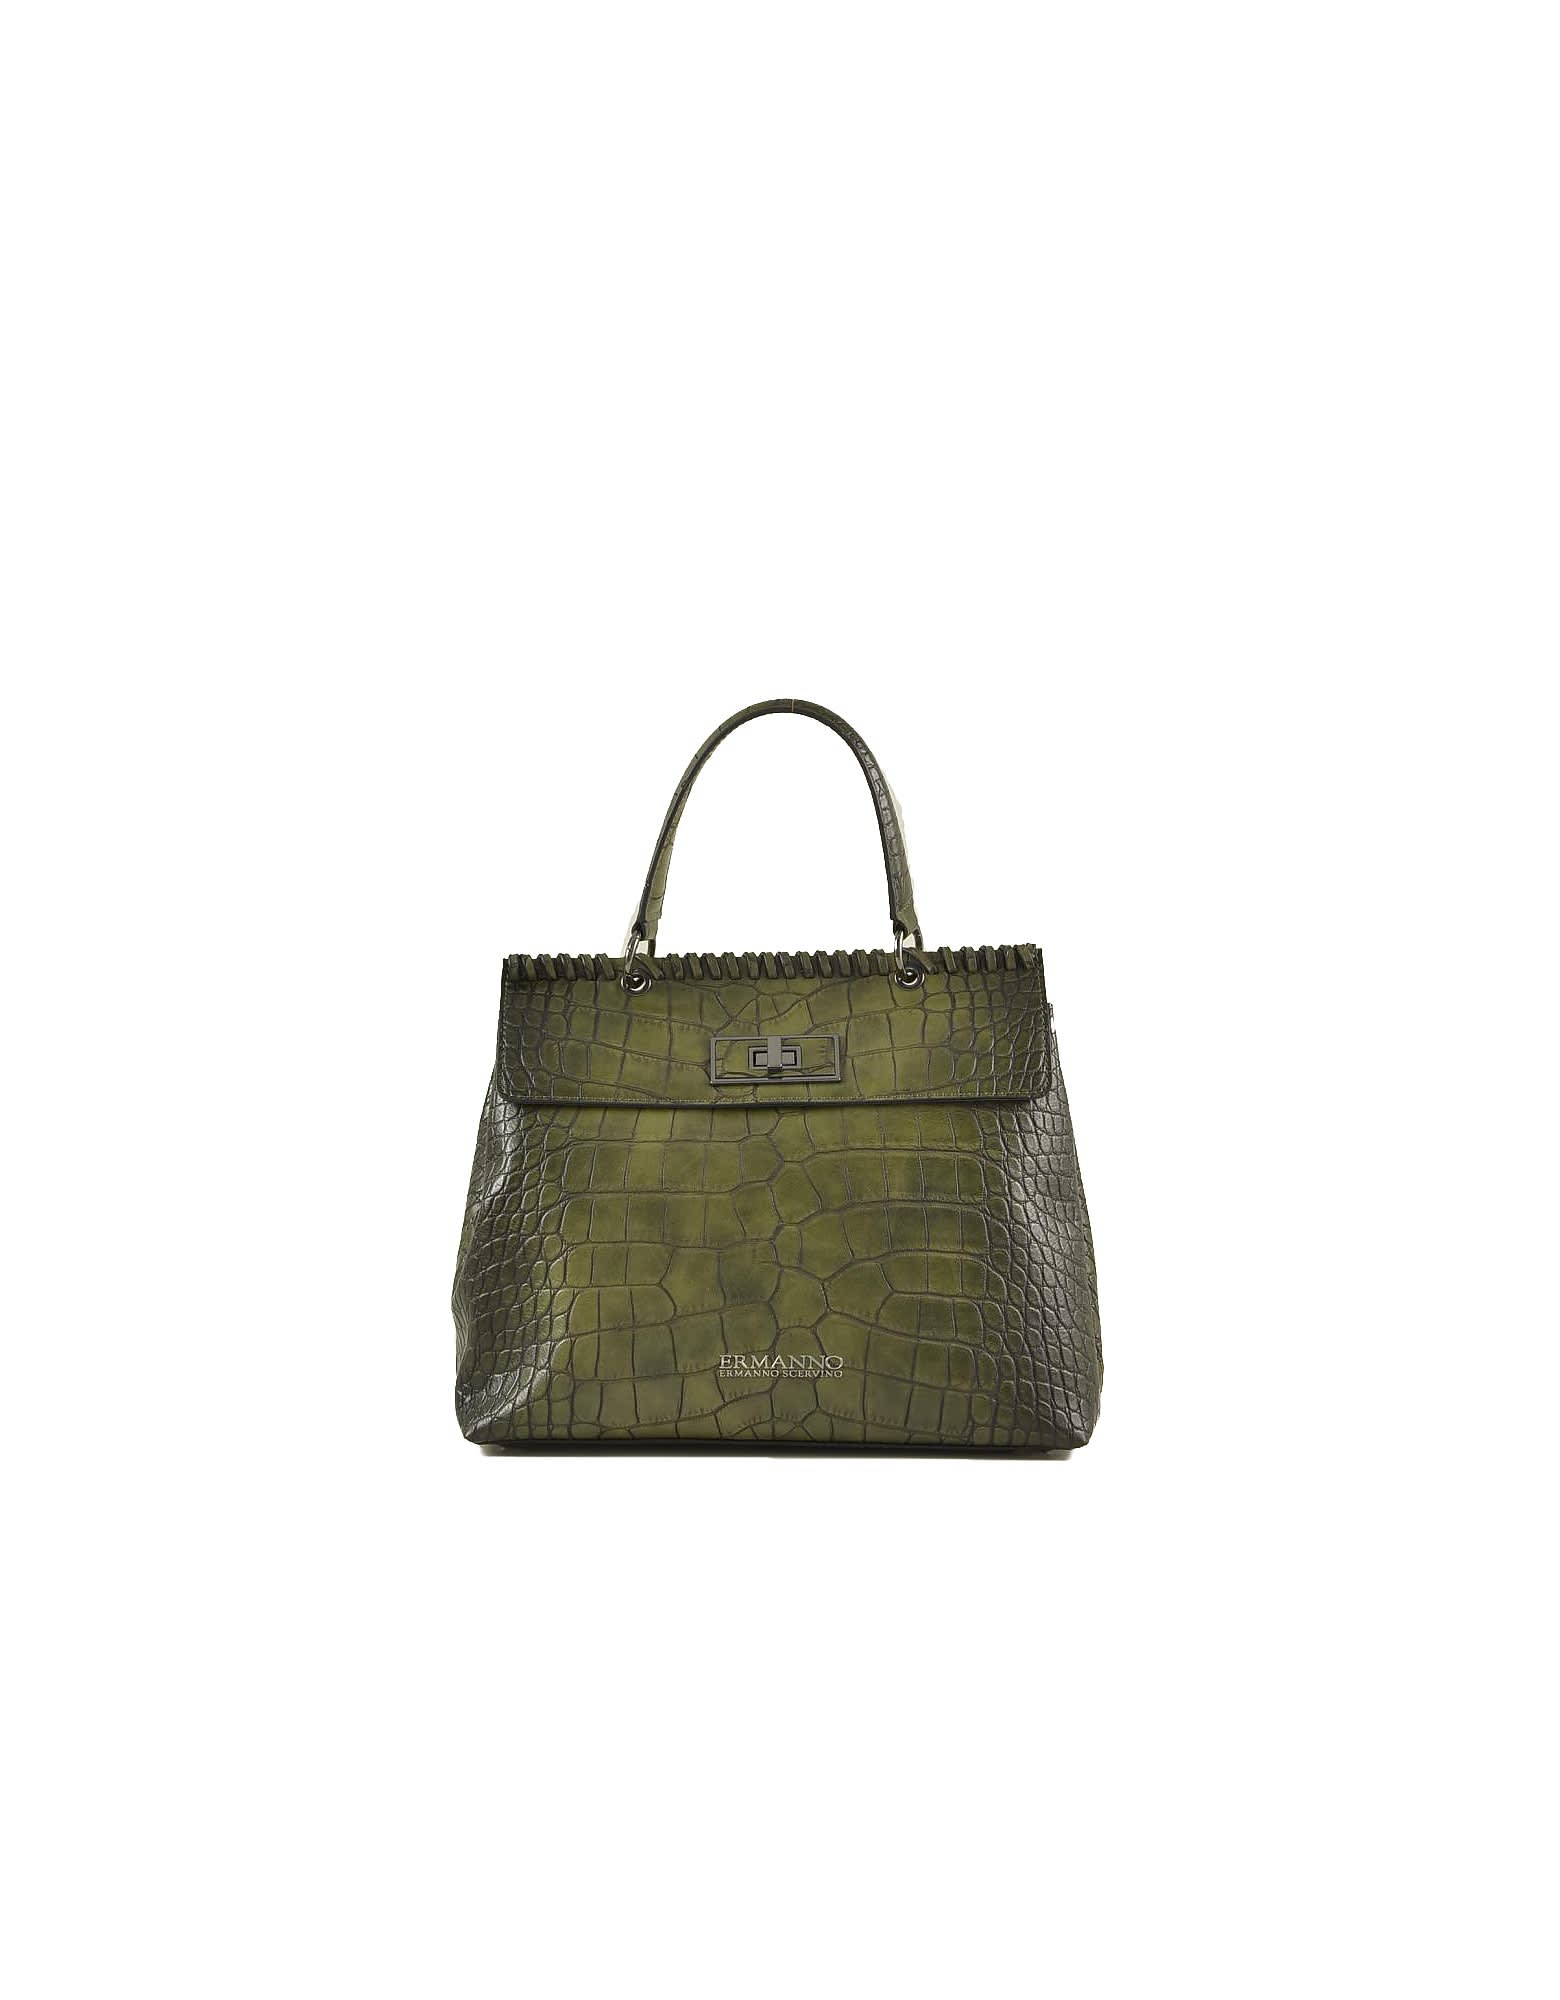 Ermanno Scervino Womens Green Handbag